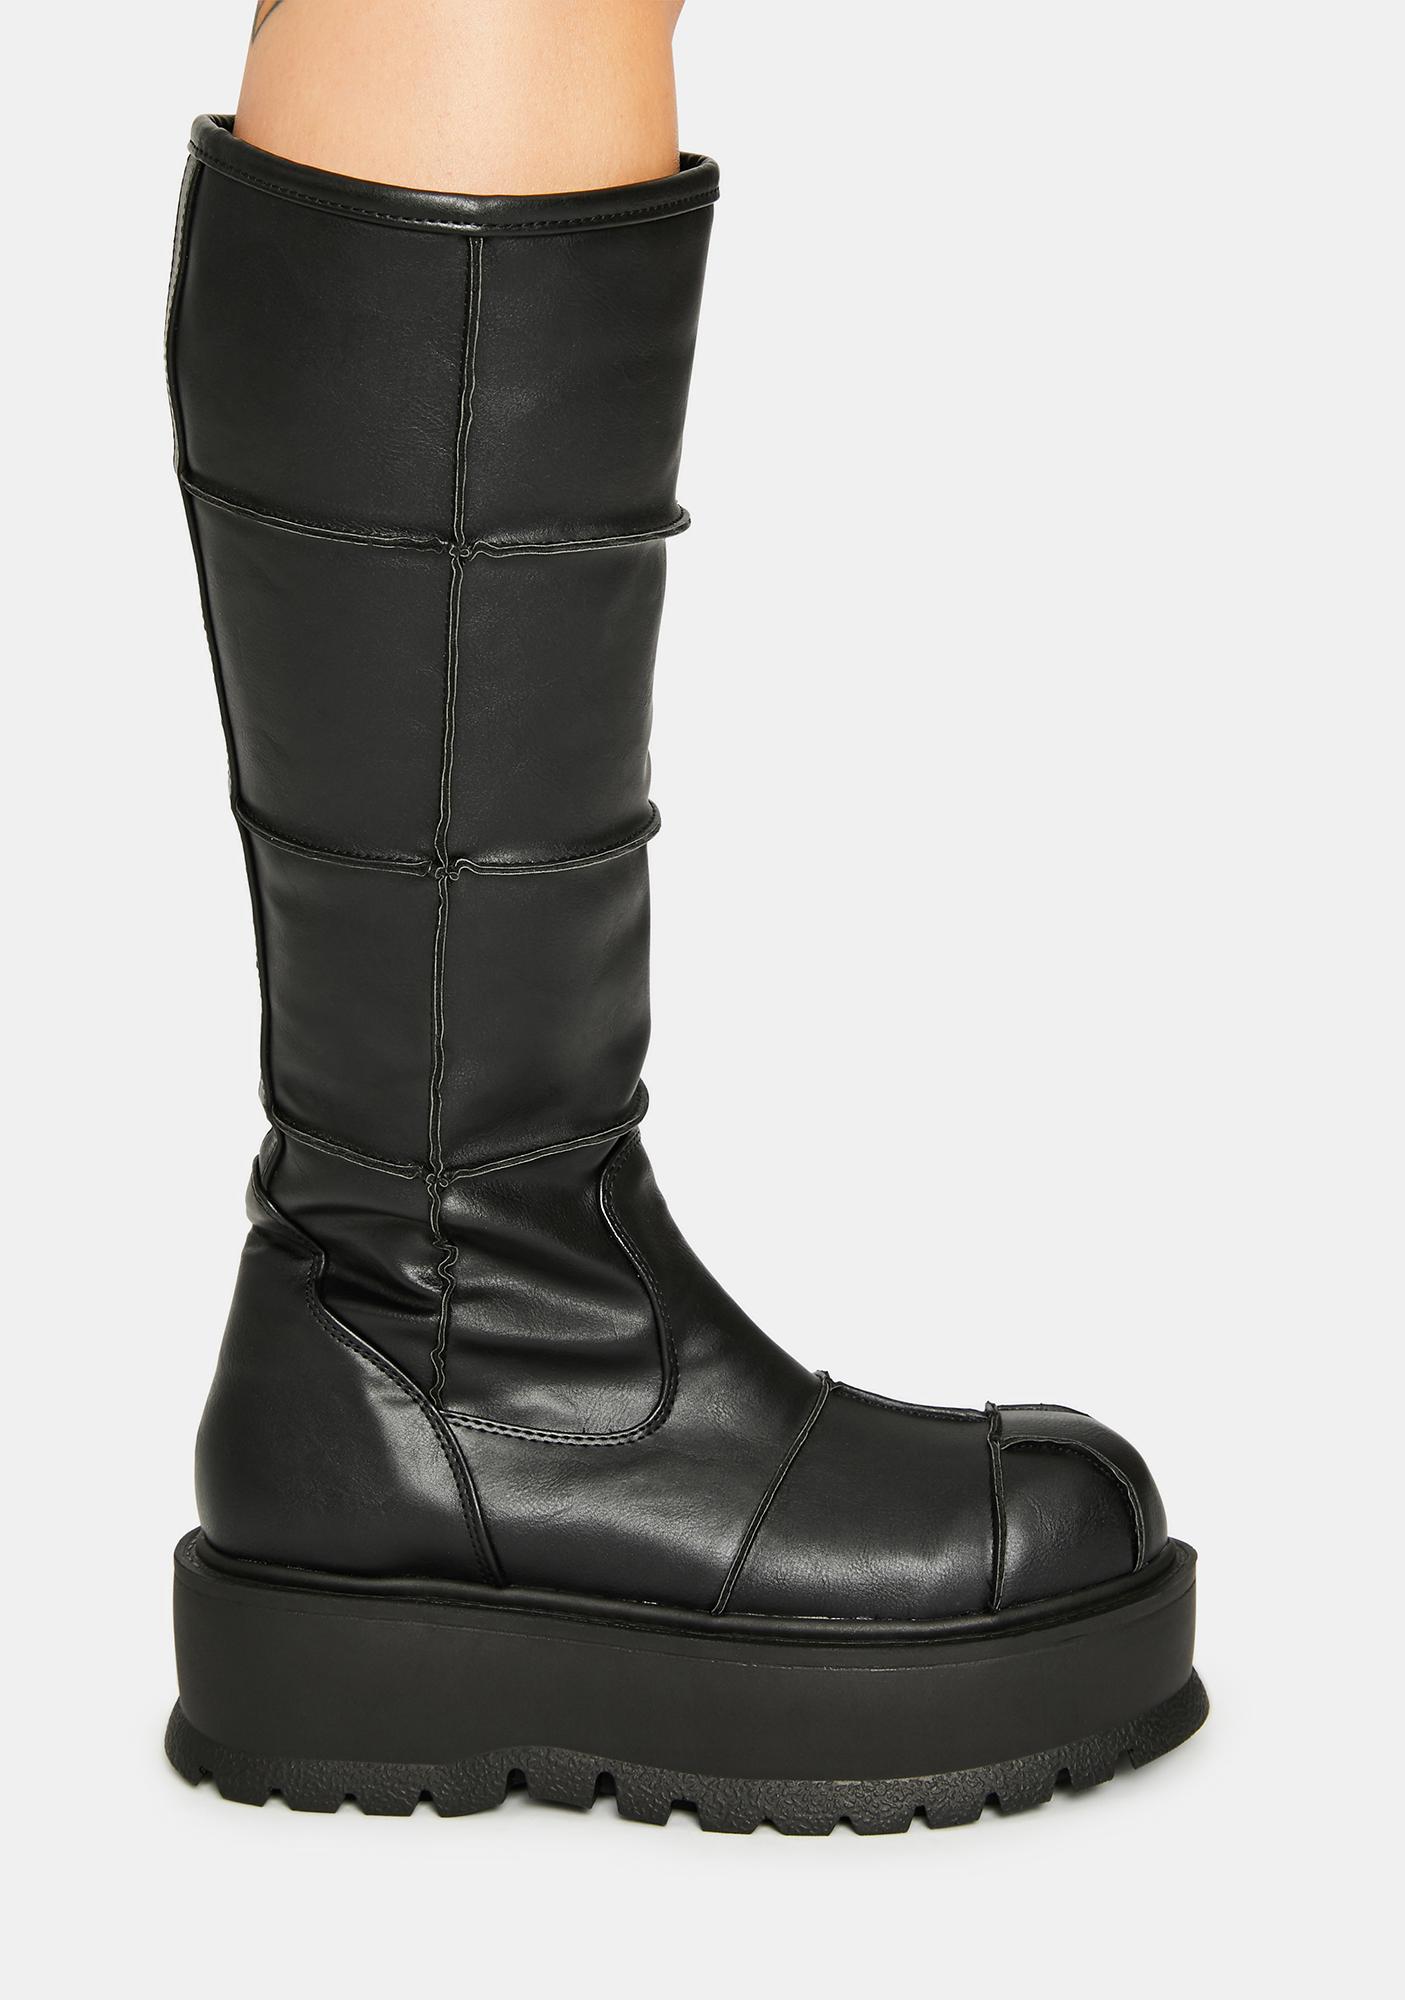 Demonia Slacker-230 Knee High Boots - Black | Dolls Kill